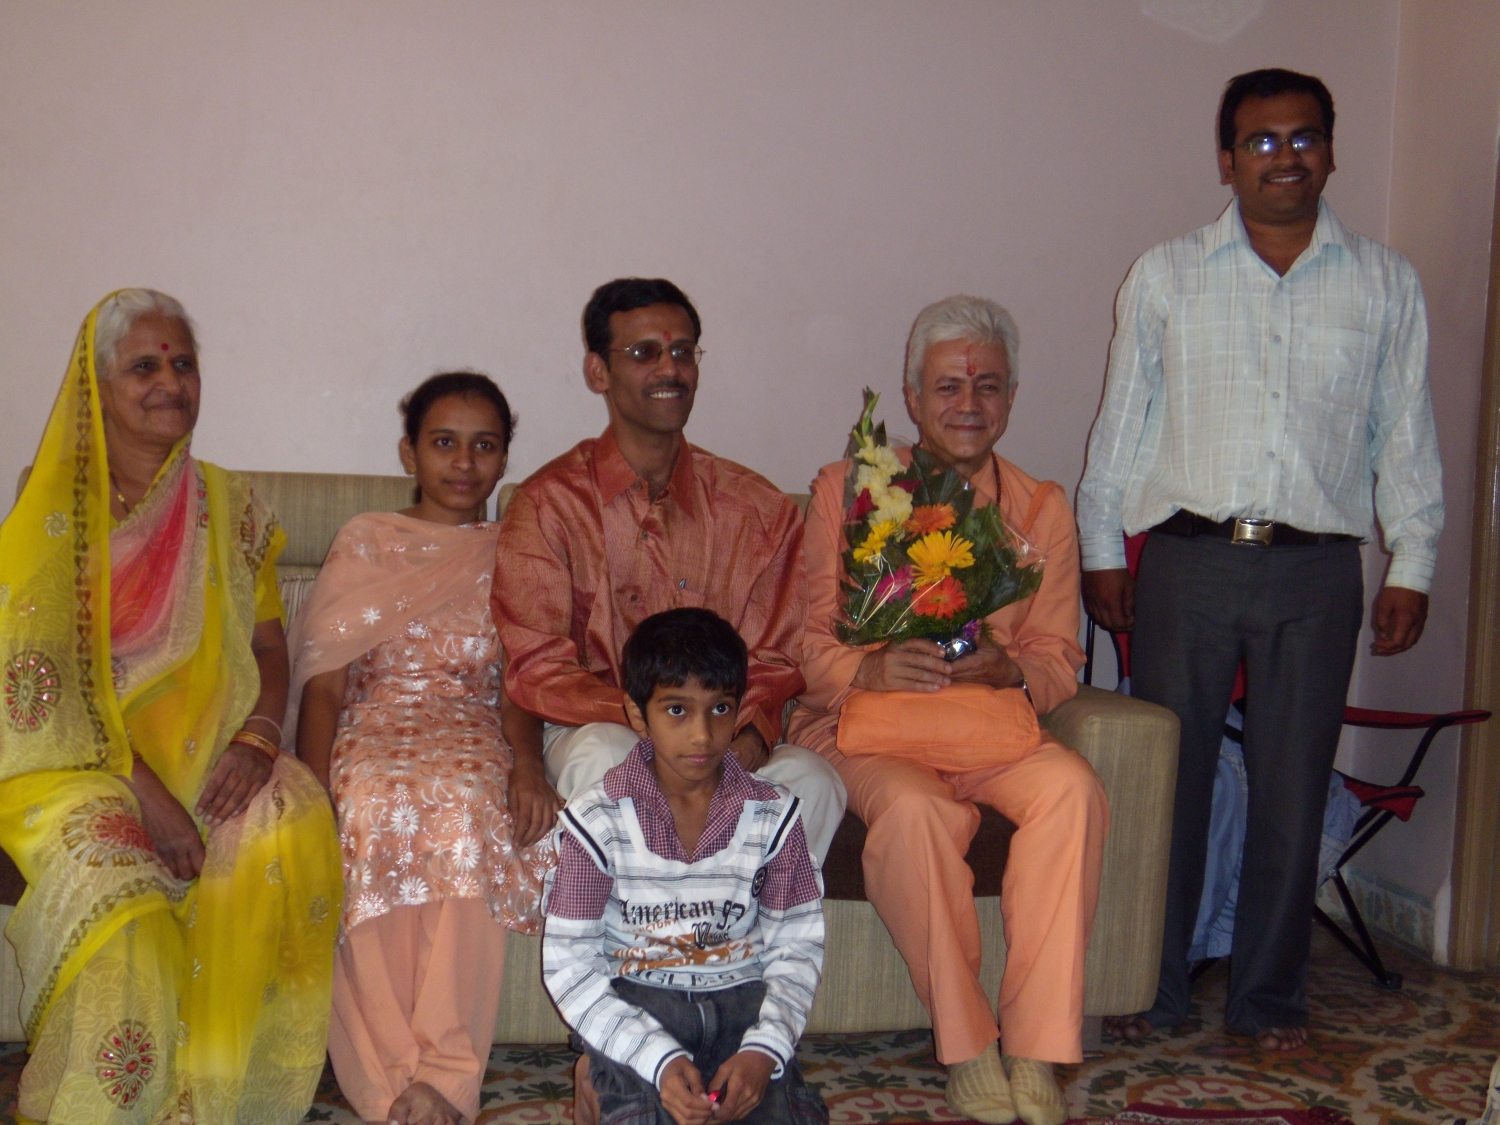 Encontro de H.H. Jagat Guru Amrta Súryánanda Mahá Rája com o Dr. Jagadish Bhutada, Keivalyadhama Yoga Institute, Lonavala, Índia - 2009, Dezembro